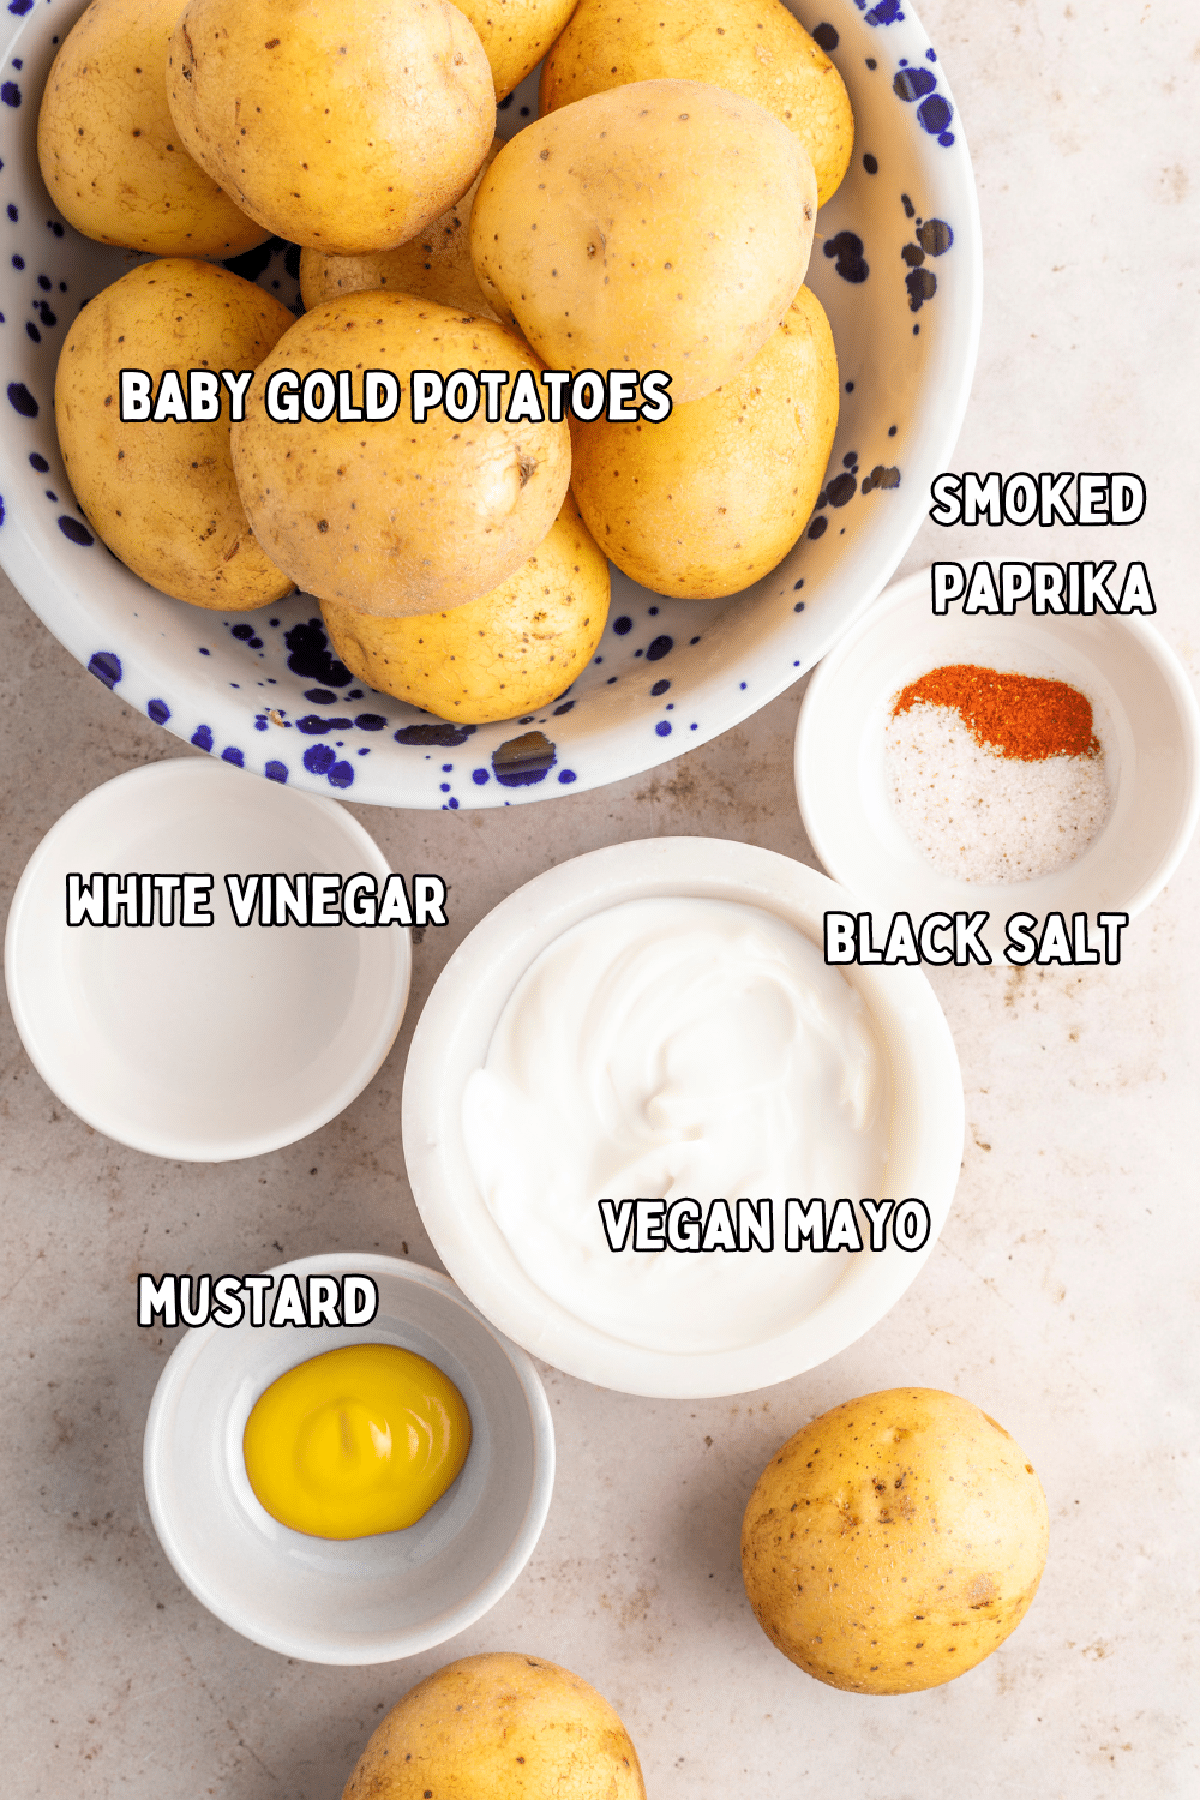 Overhead view of ingredients to make deviled egg potatoes: baby gold potatoes, white vinegar, vegan mayo, mustard, black salt, and smoked paprika.